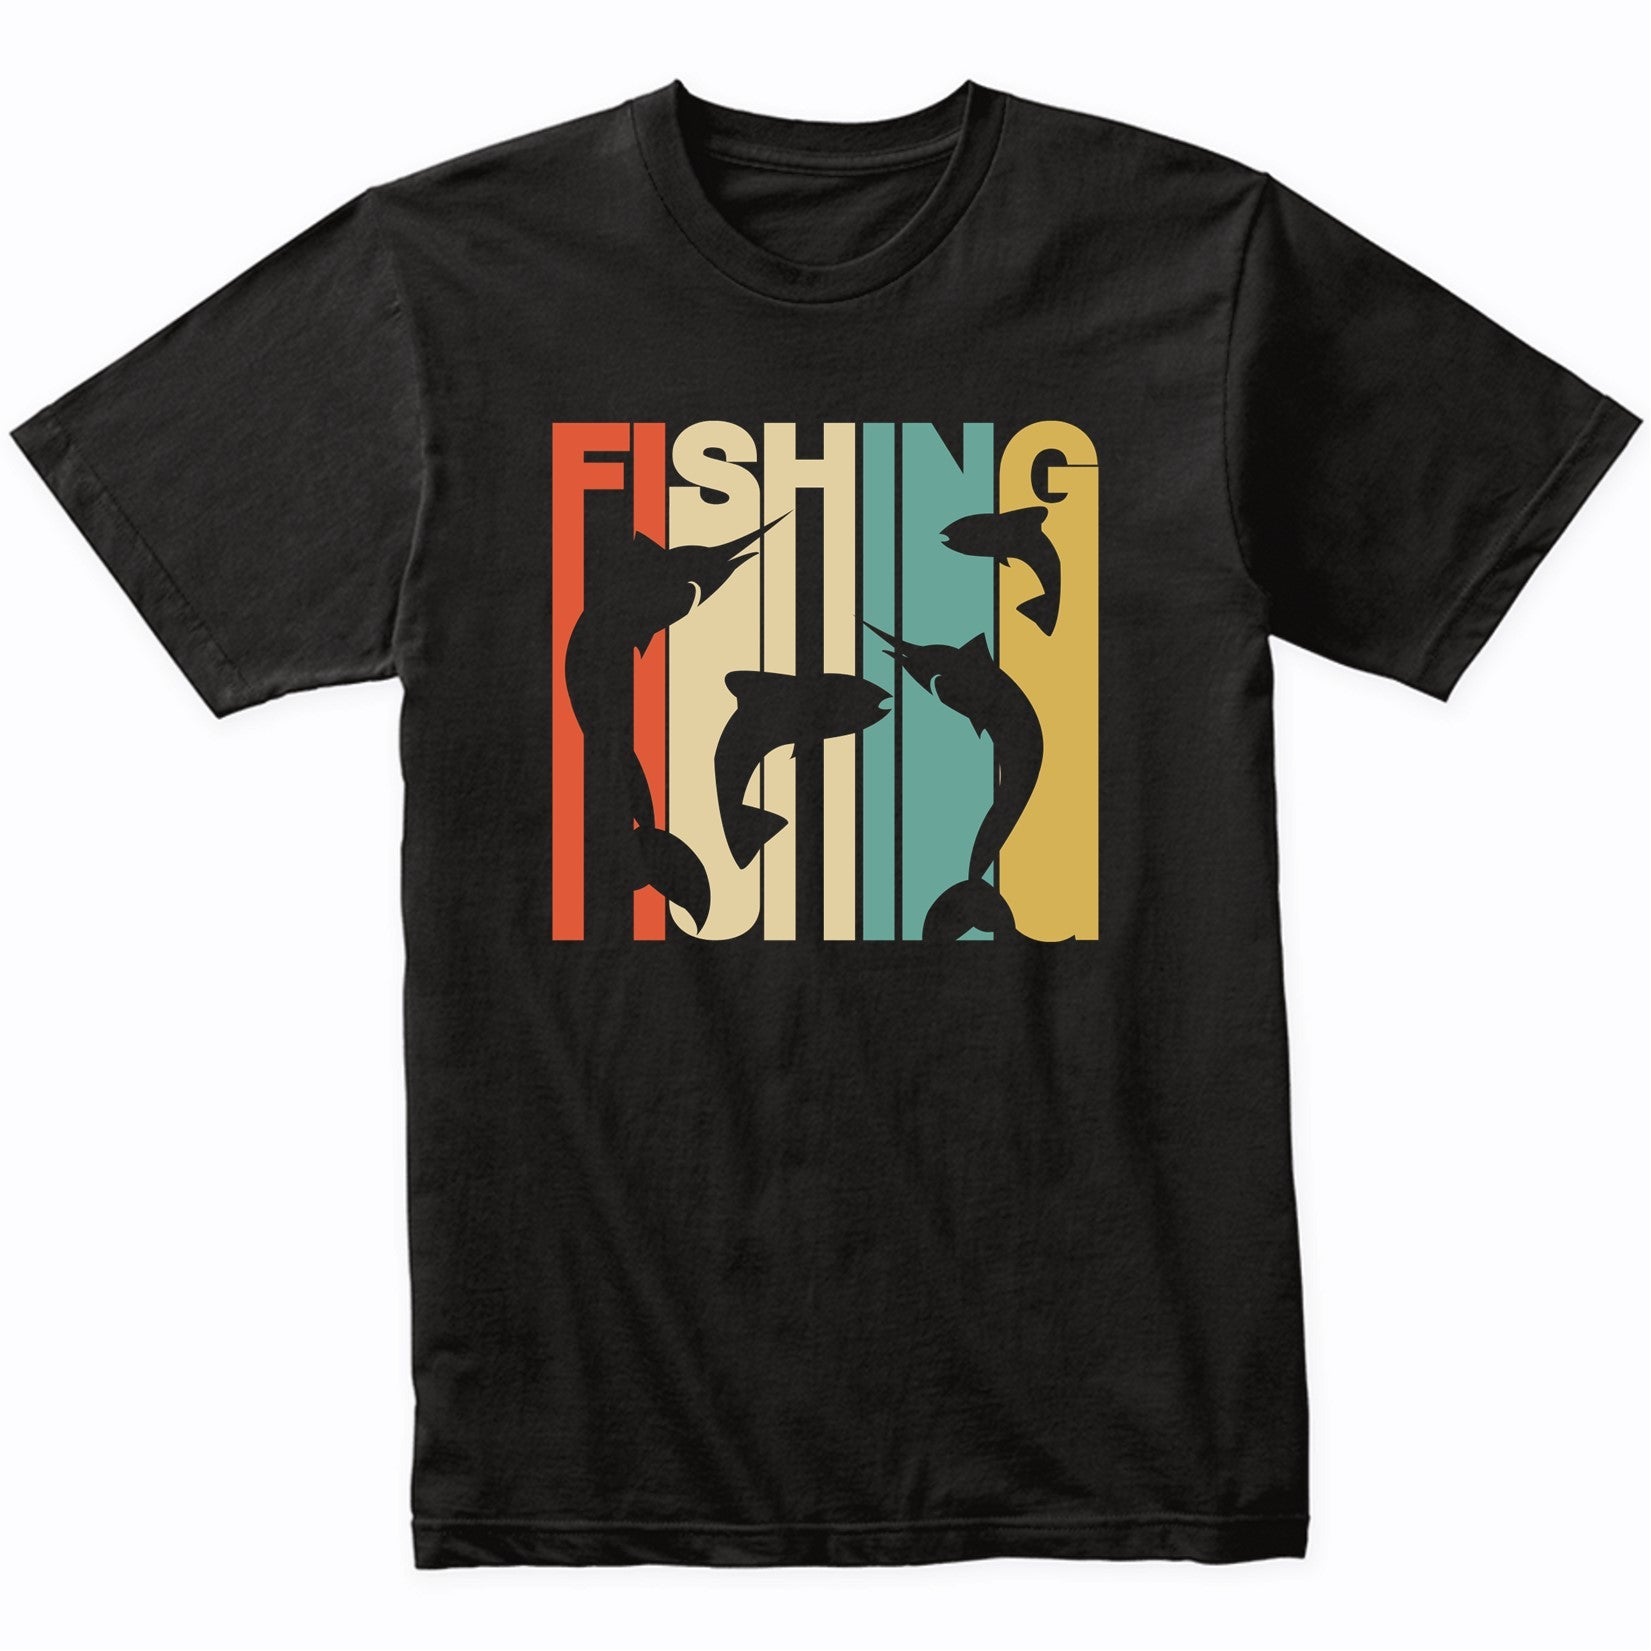 Vintage 1970's Style Fishing Fish Silhouettes Retro T-Shirt